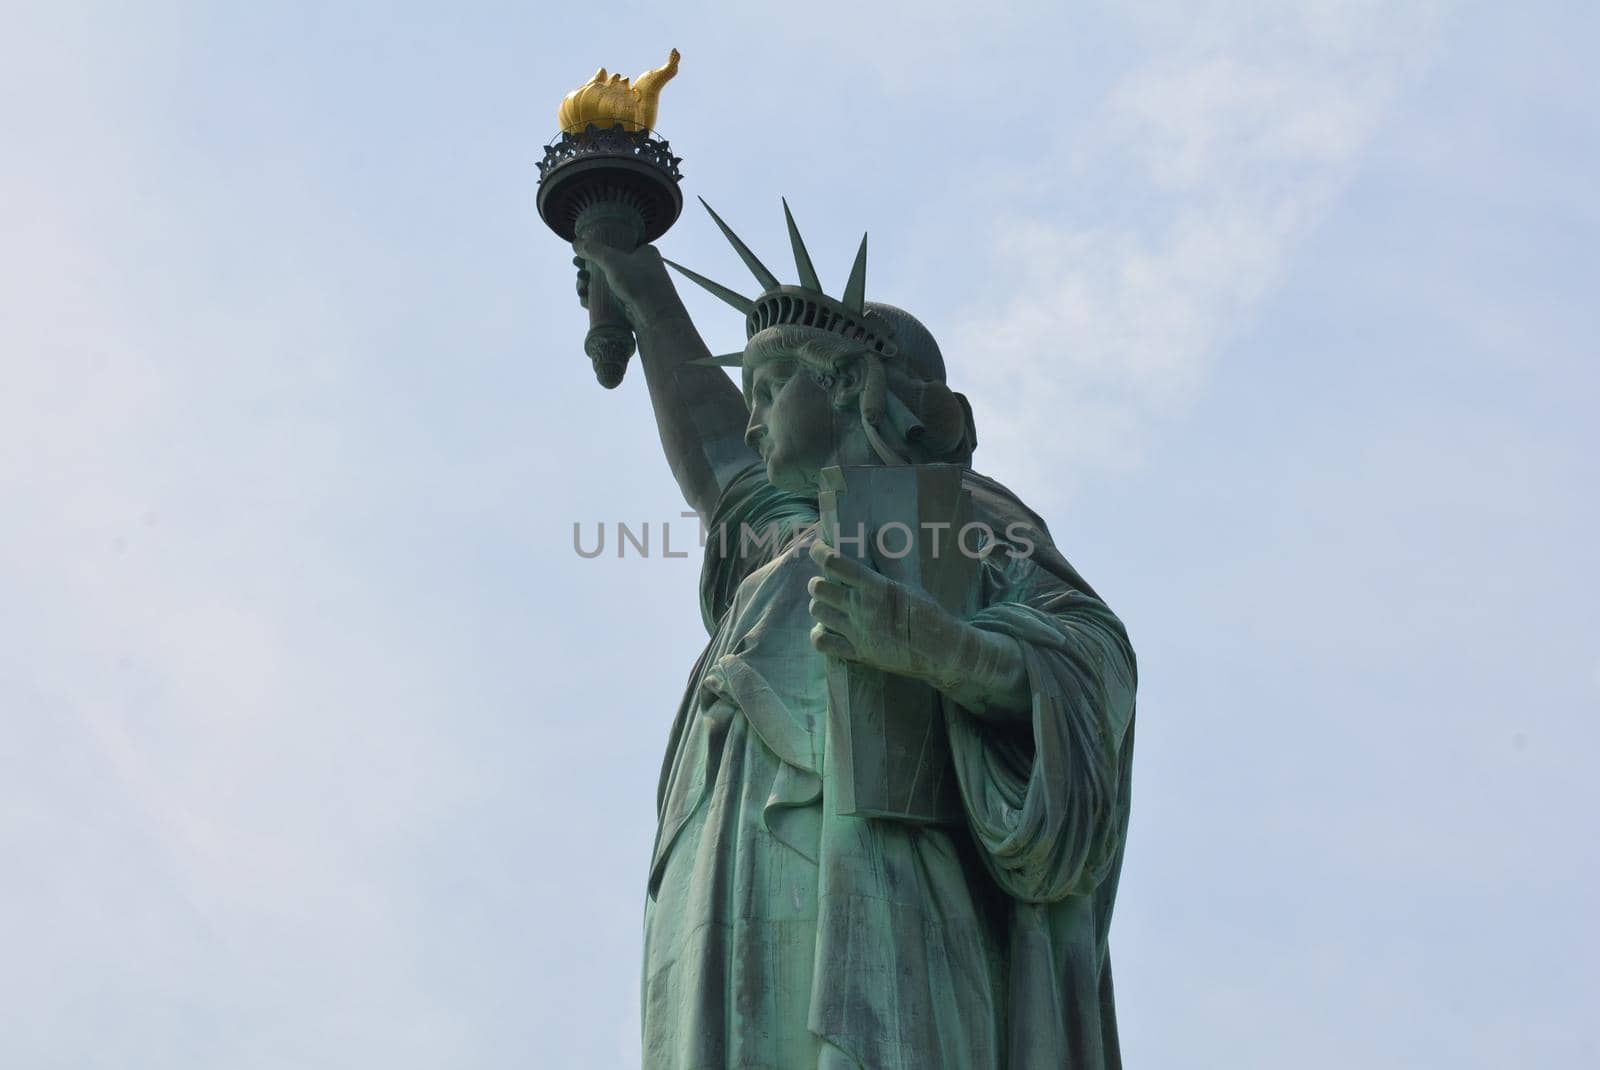 green copper statue of liberty landmark in New York by stockphotofan1